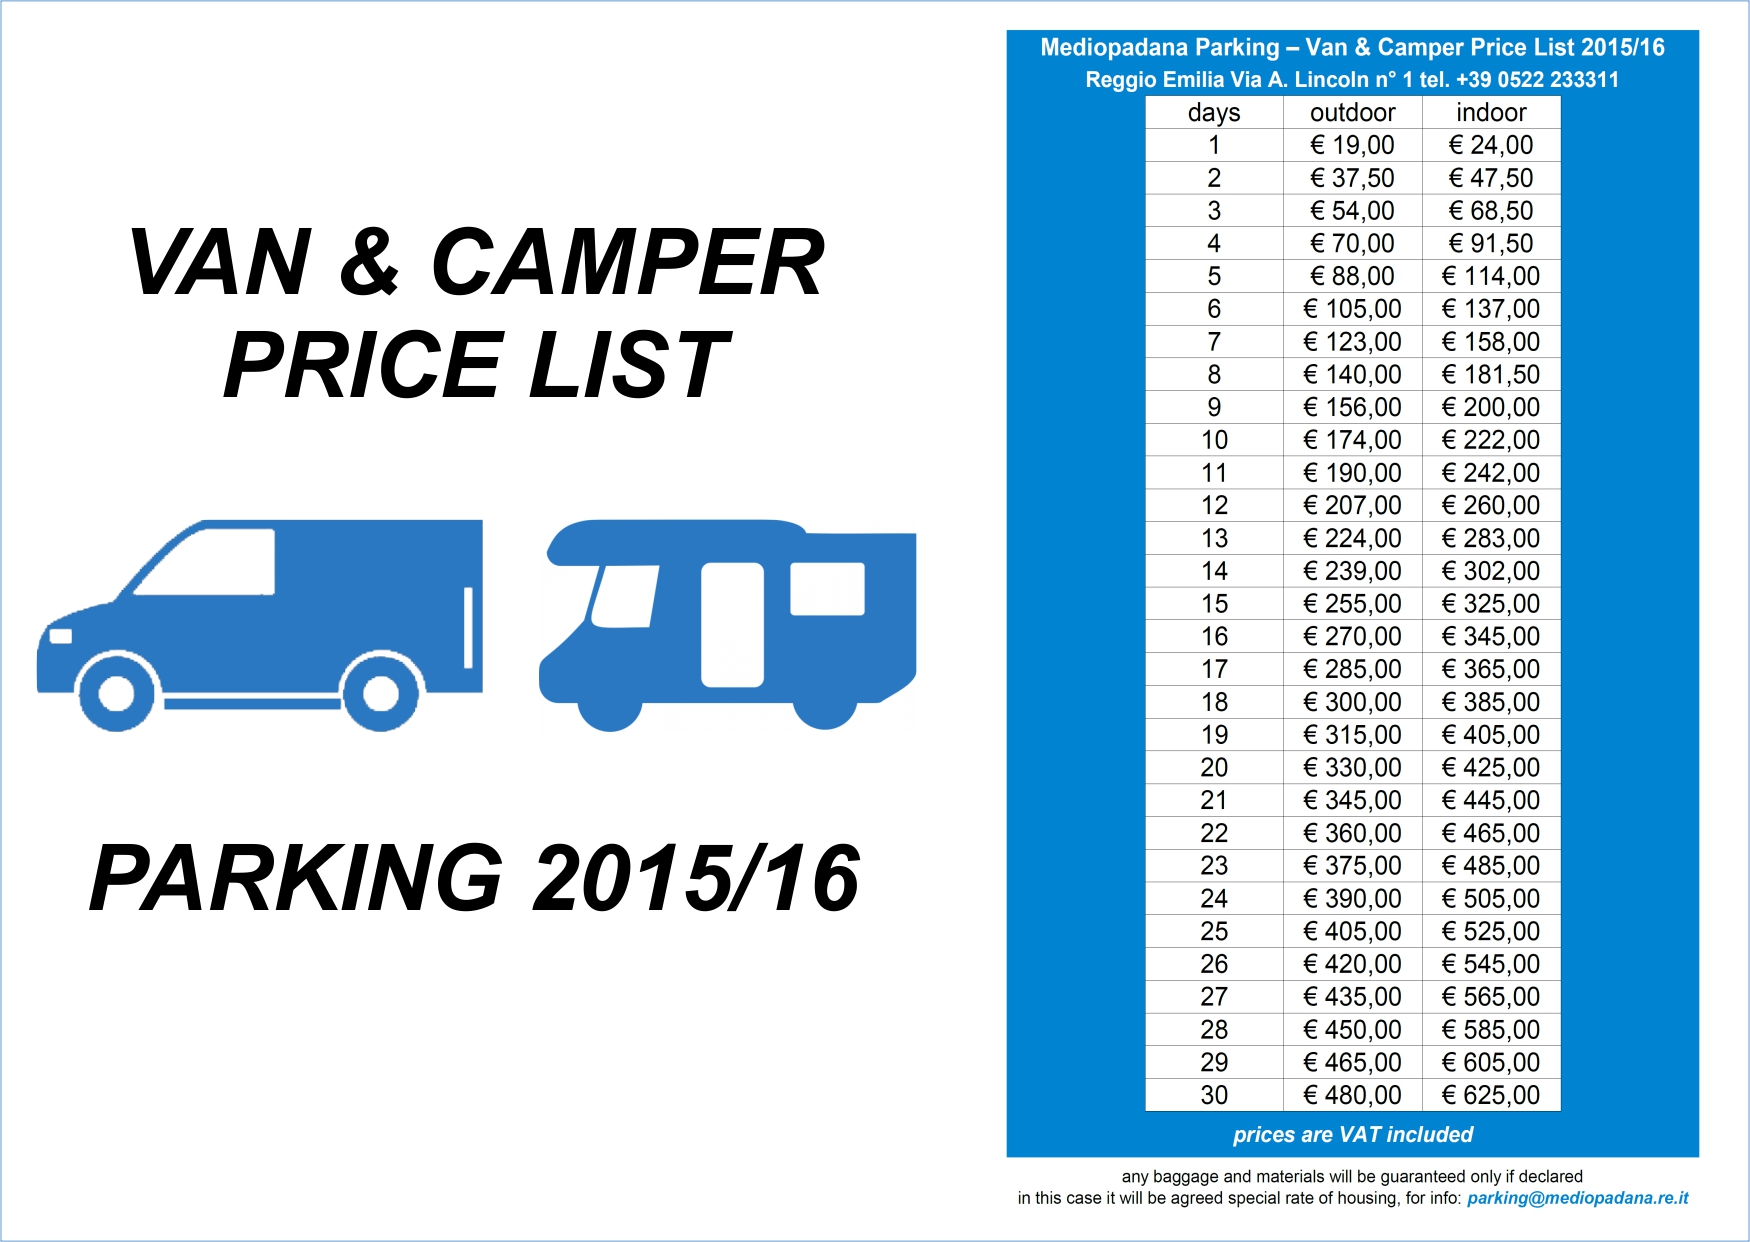 Mediopadana Parking - Price List 2015/16